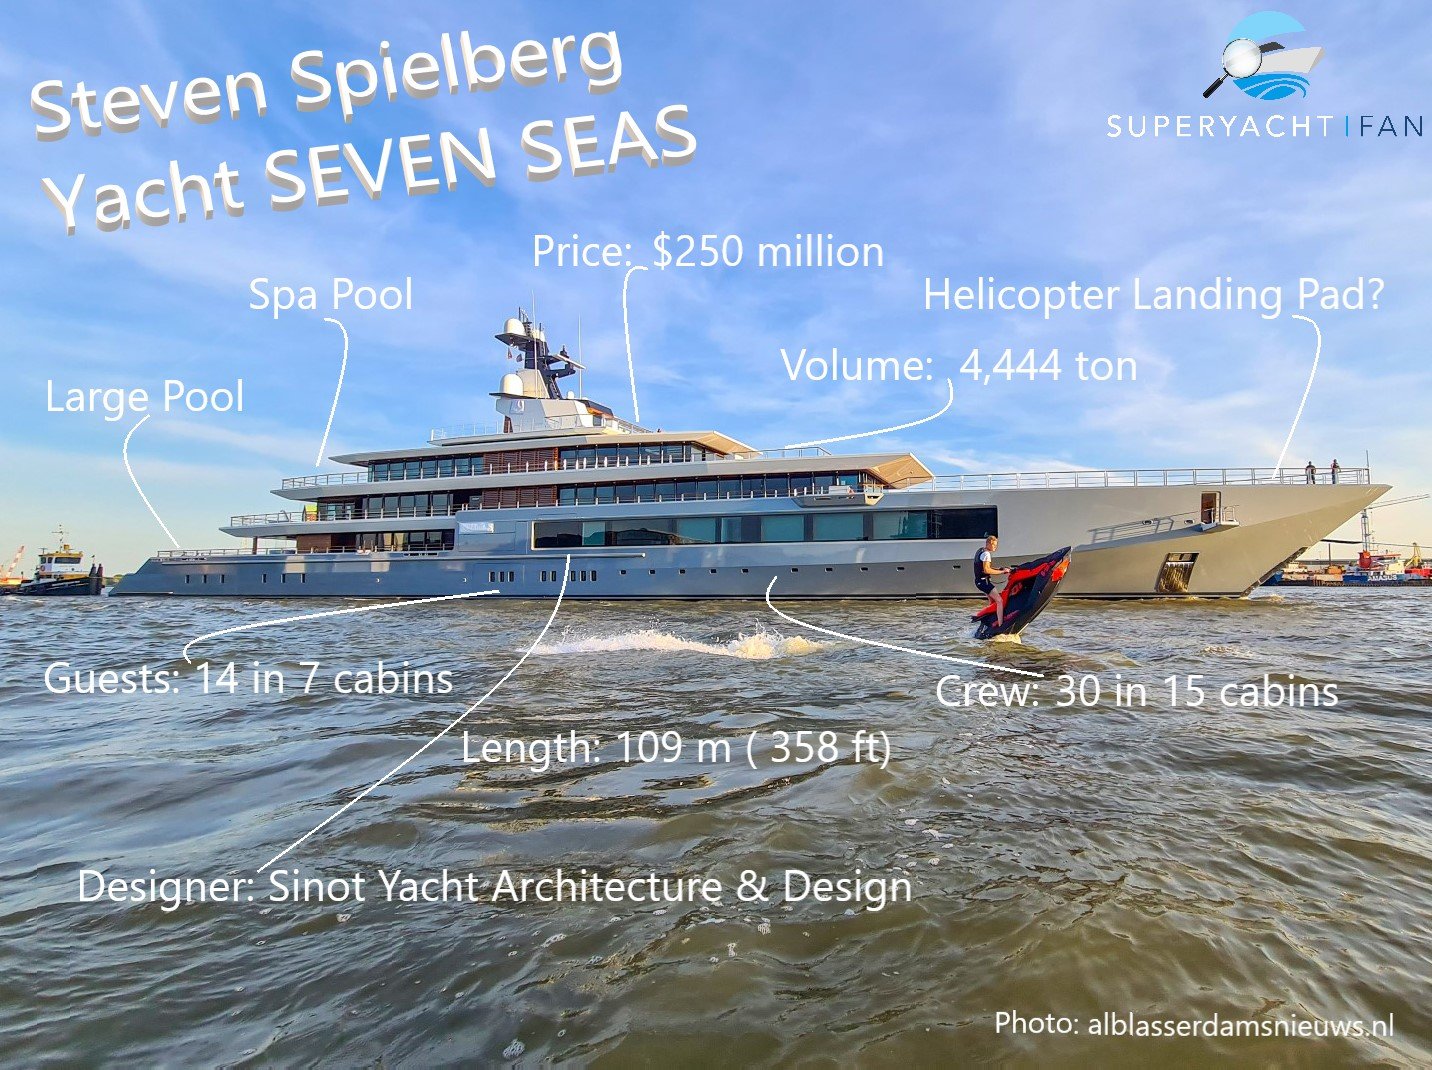 Steven Spielberg Yacht Seven Seas Infographic